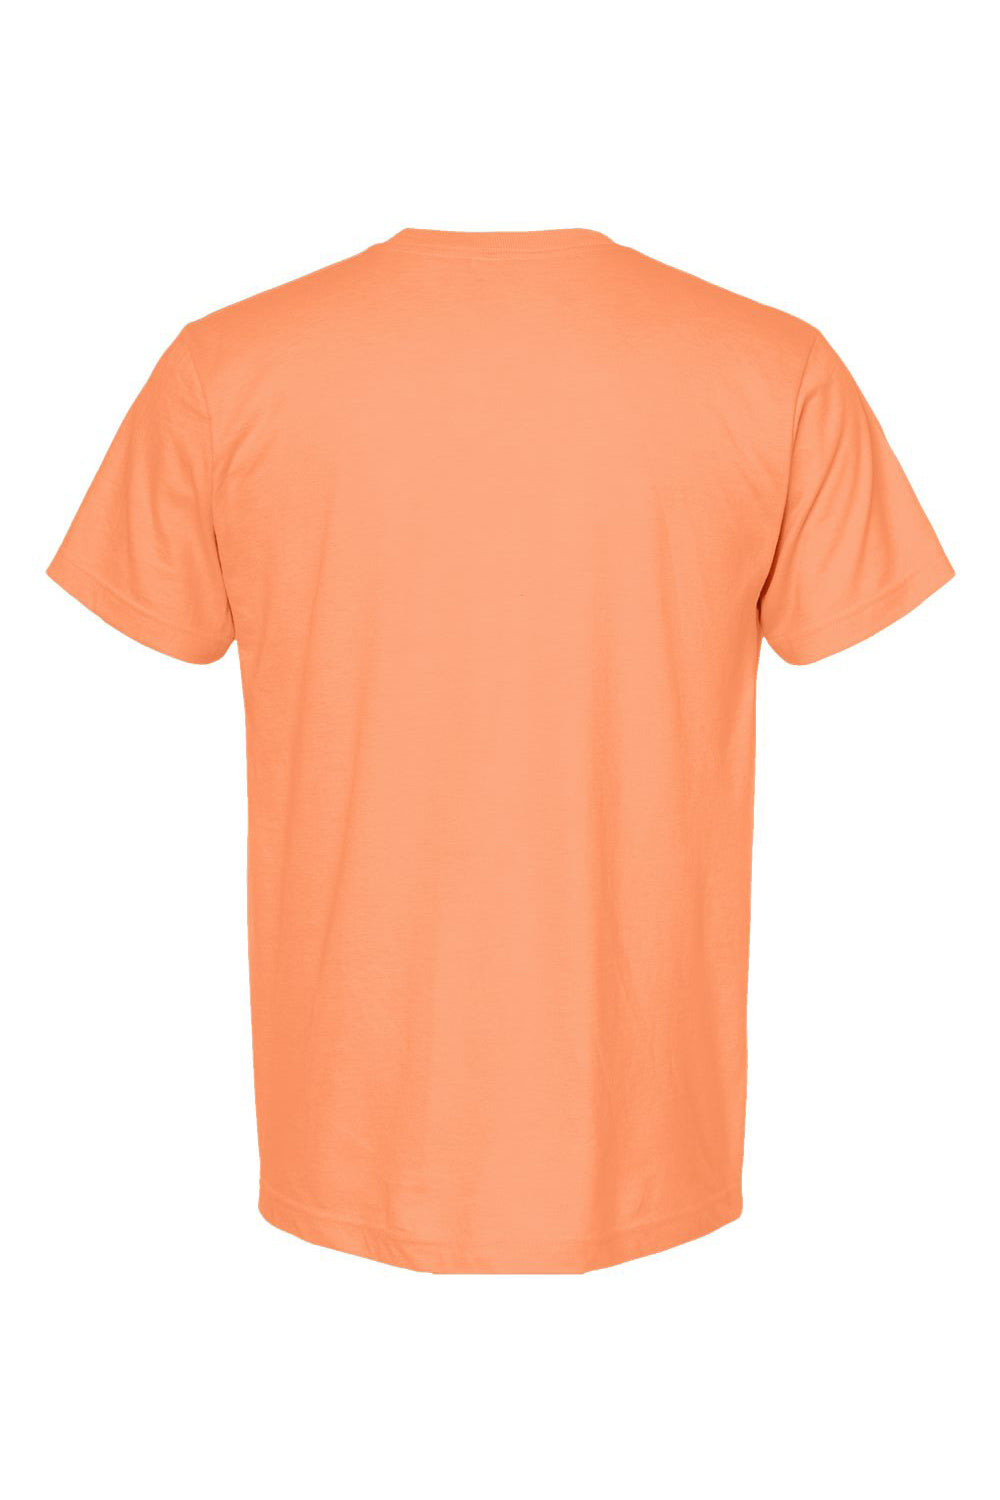 Tultex 202 Mens Fine Jersey Short Sleeve Crewneck T-Shirt Heather Cantaloupe Orange Flat Back